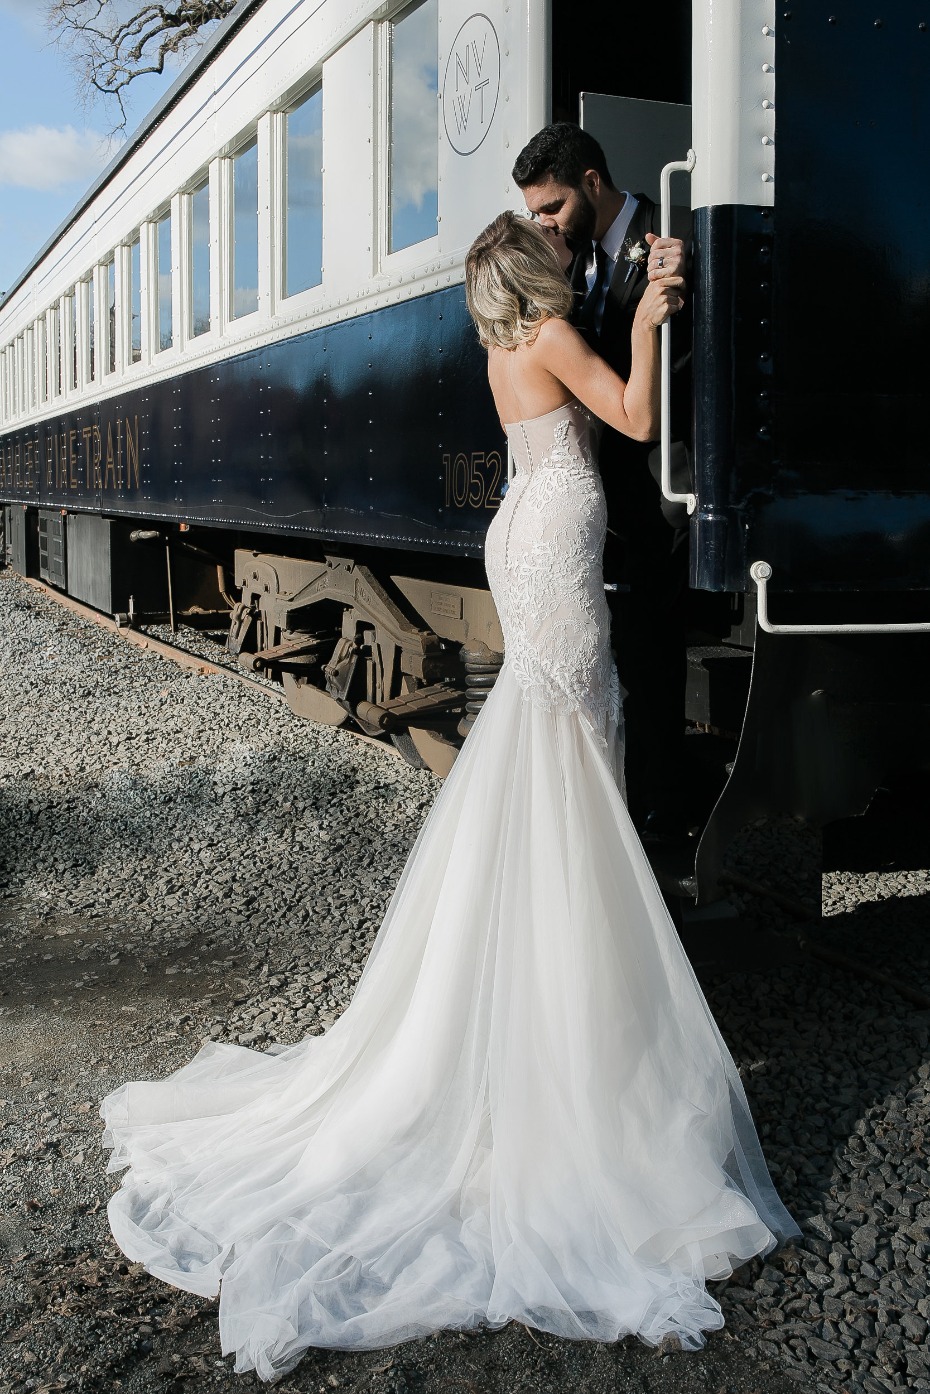 wedding kiss on the wine train